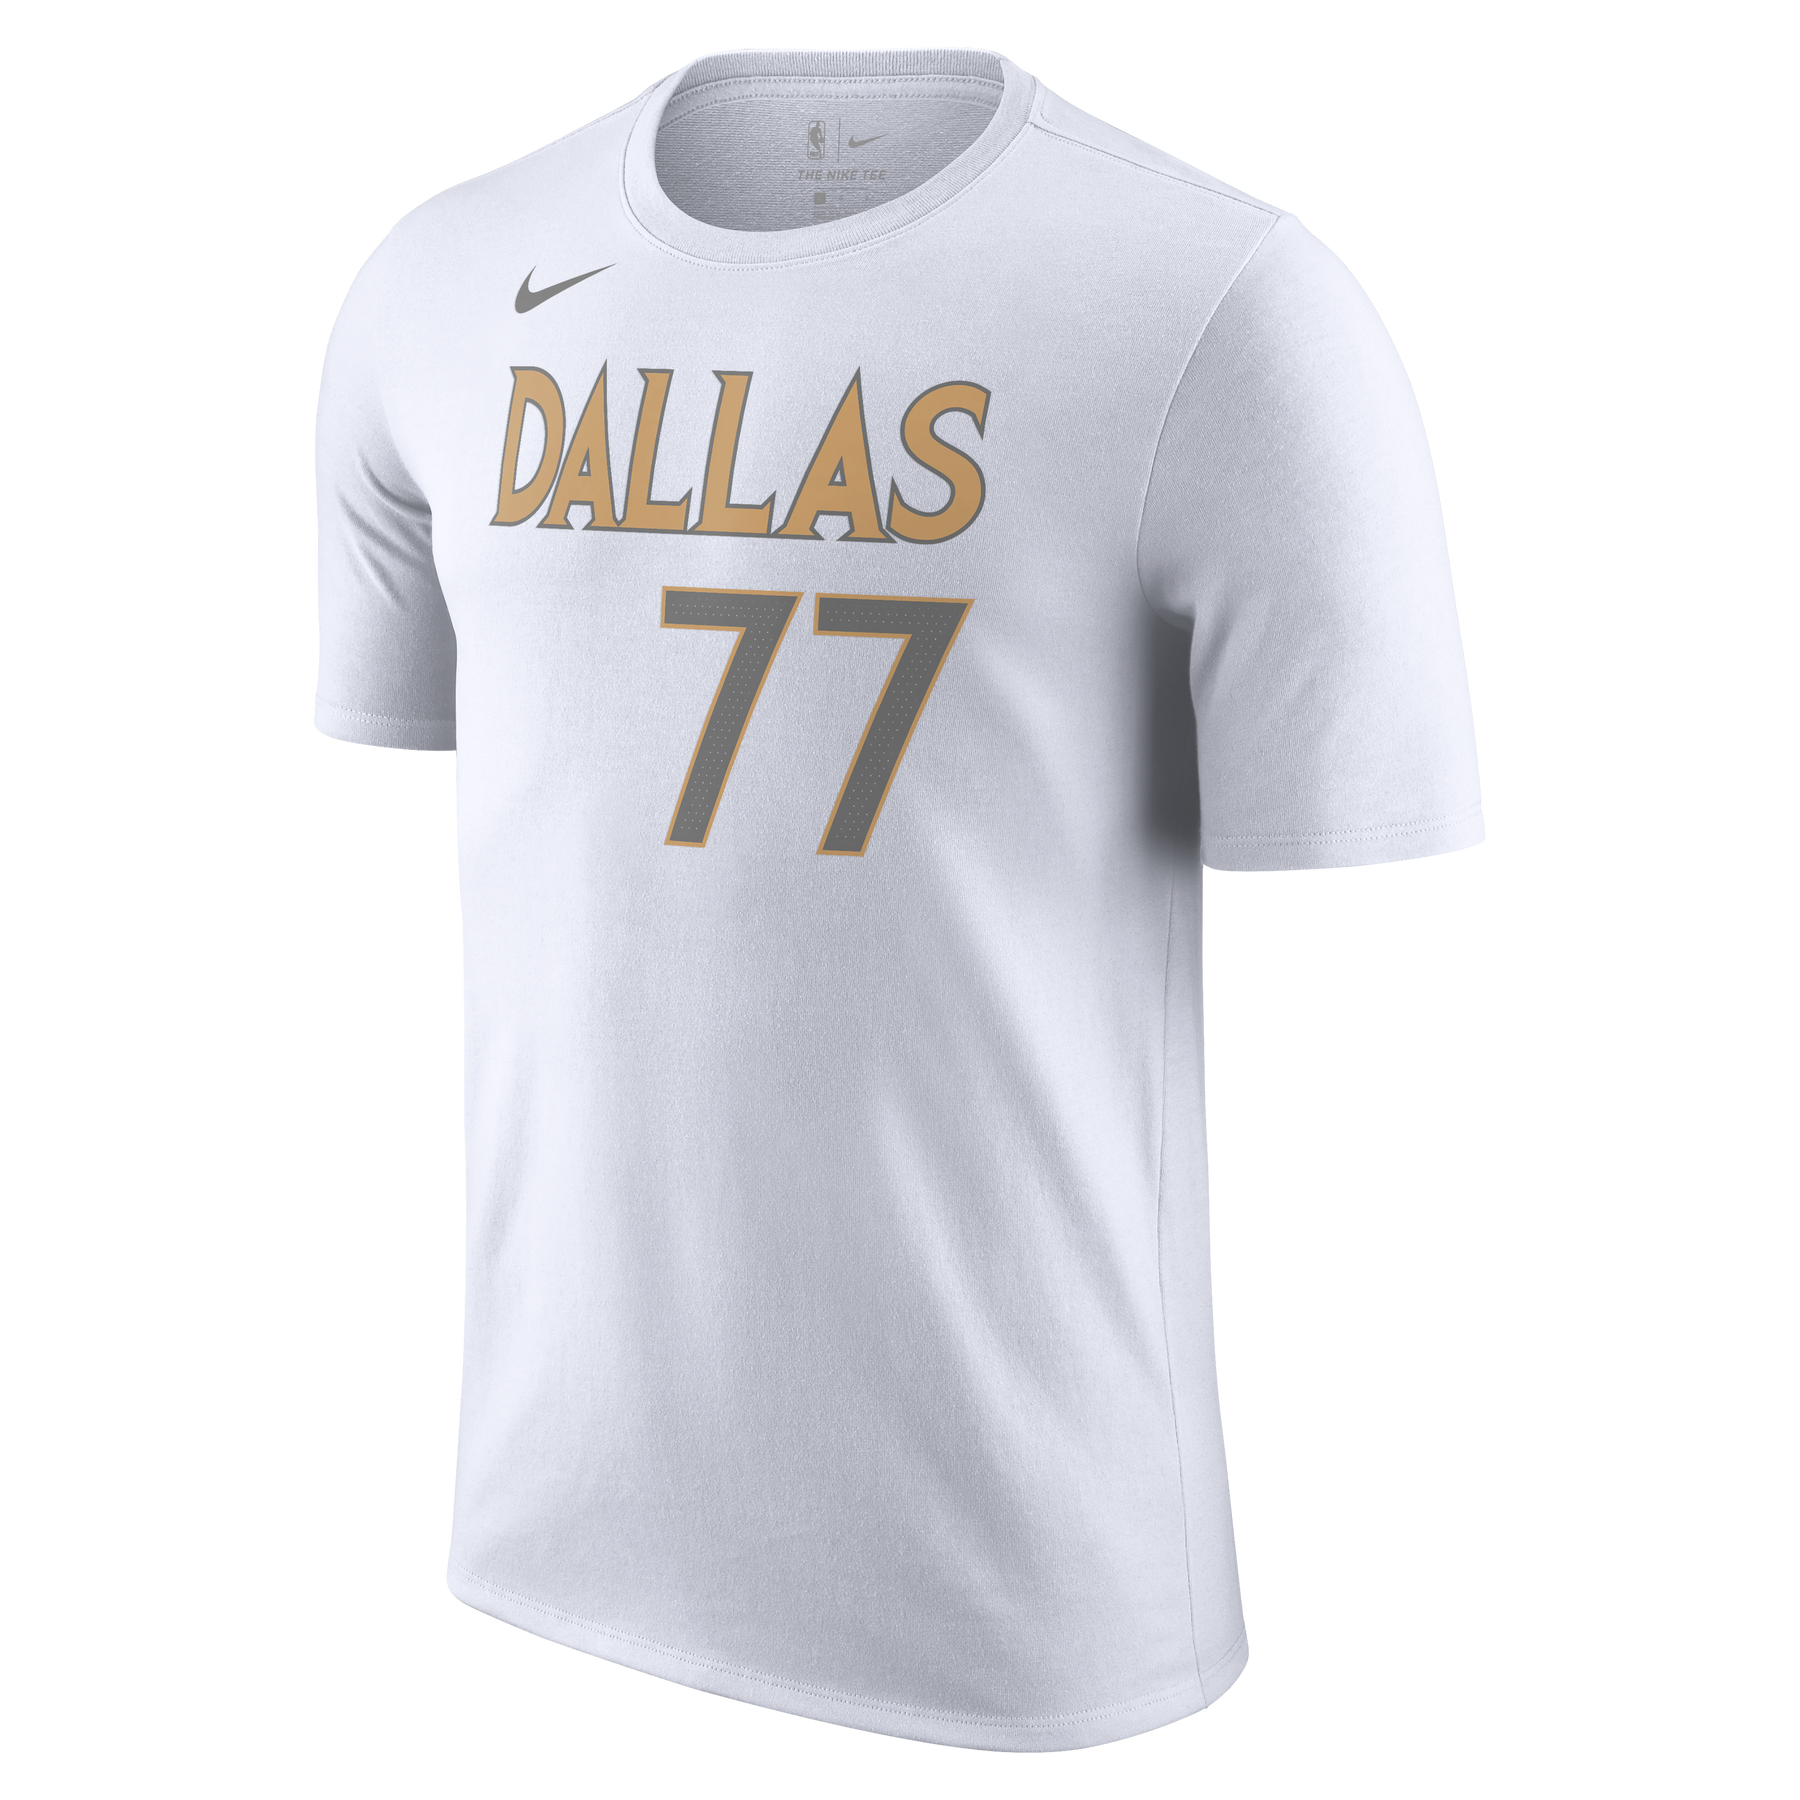 Nike Performance NBA DALLAS MAVERICKS LUKA DONCIC NAME AND NUMBER TEE -  Print T-shirt - white/doncic luka/white 